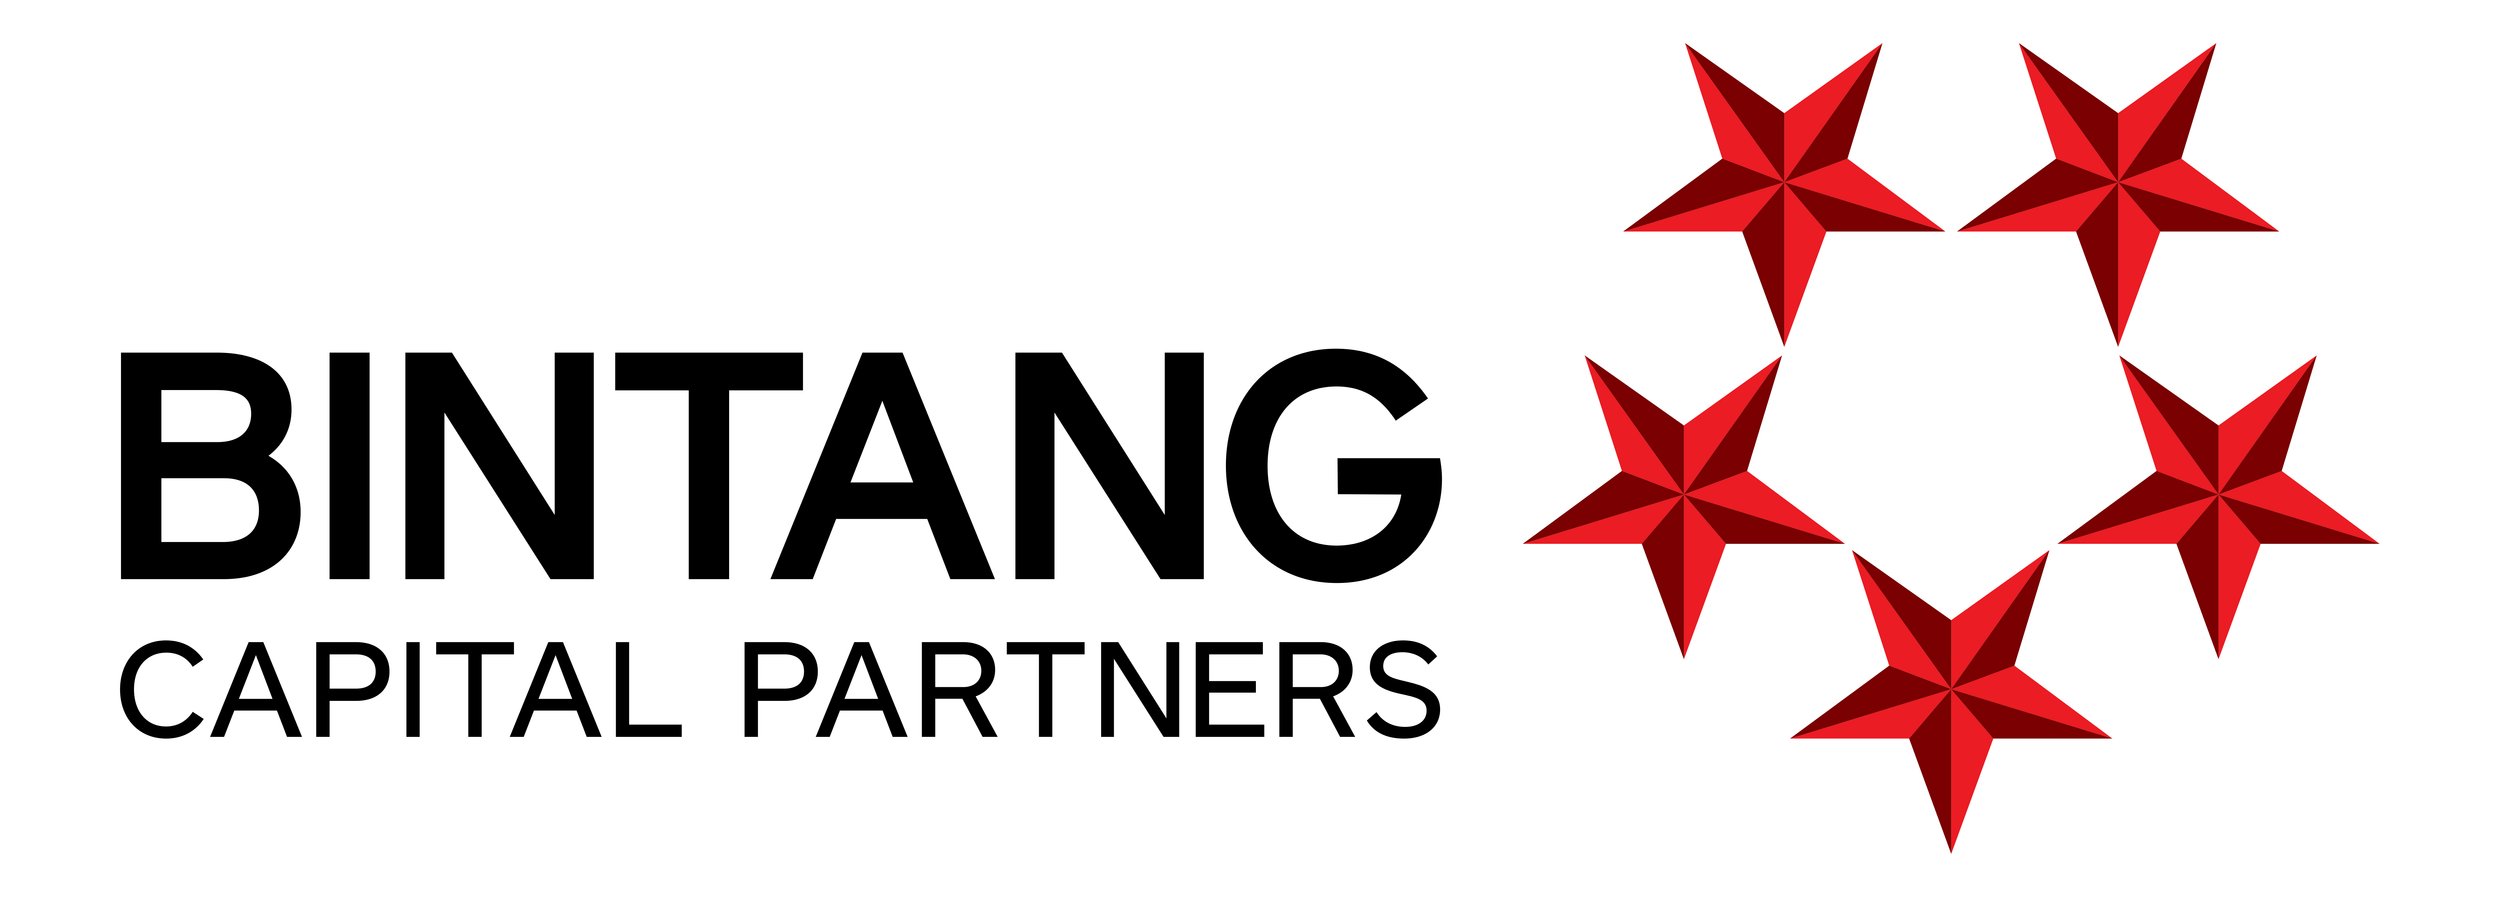 Bintang Capital Partners Berhad - Certified B Corporation in Malaysia